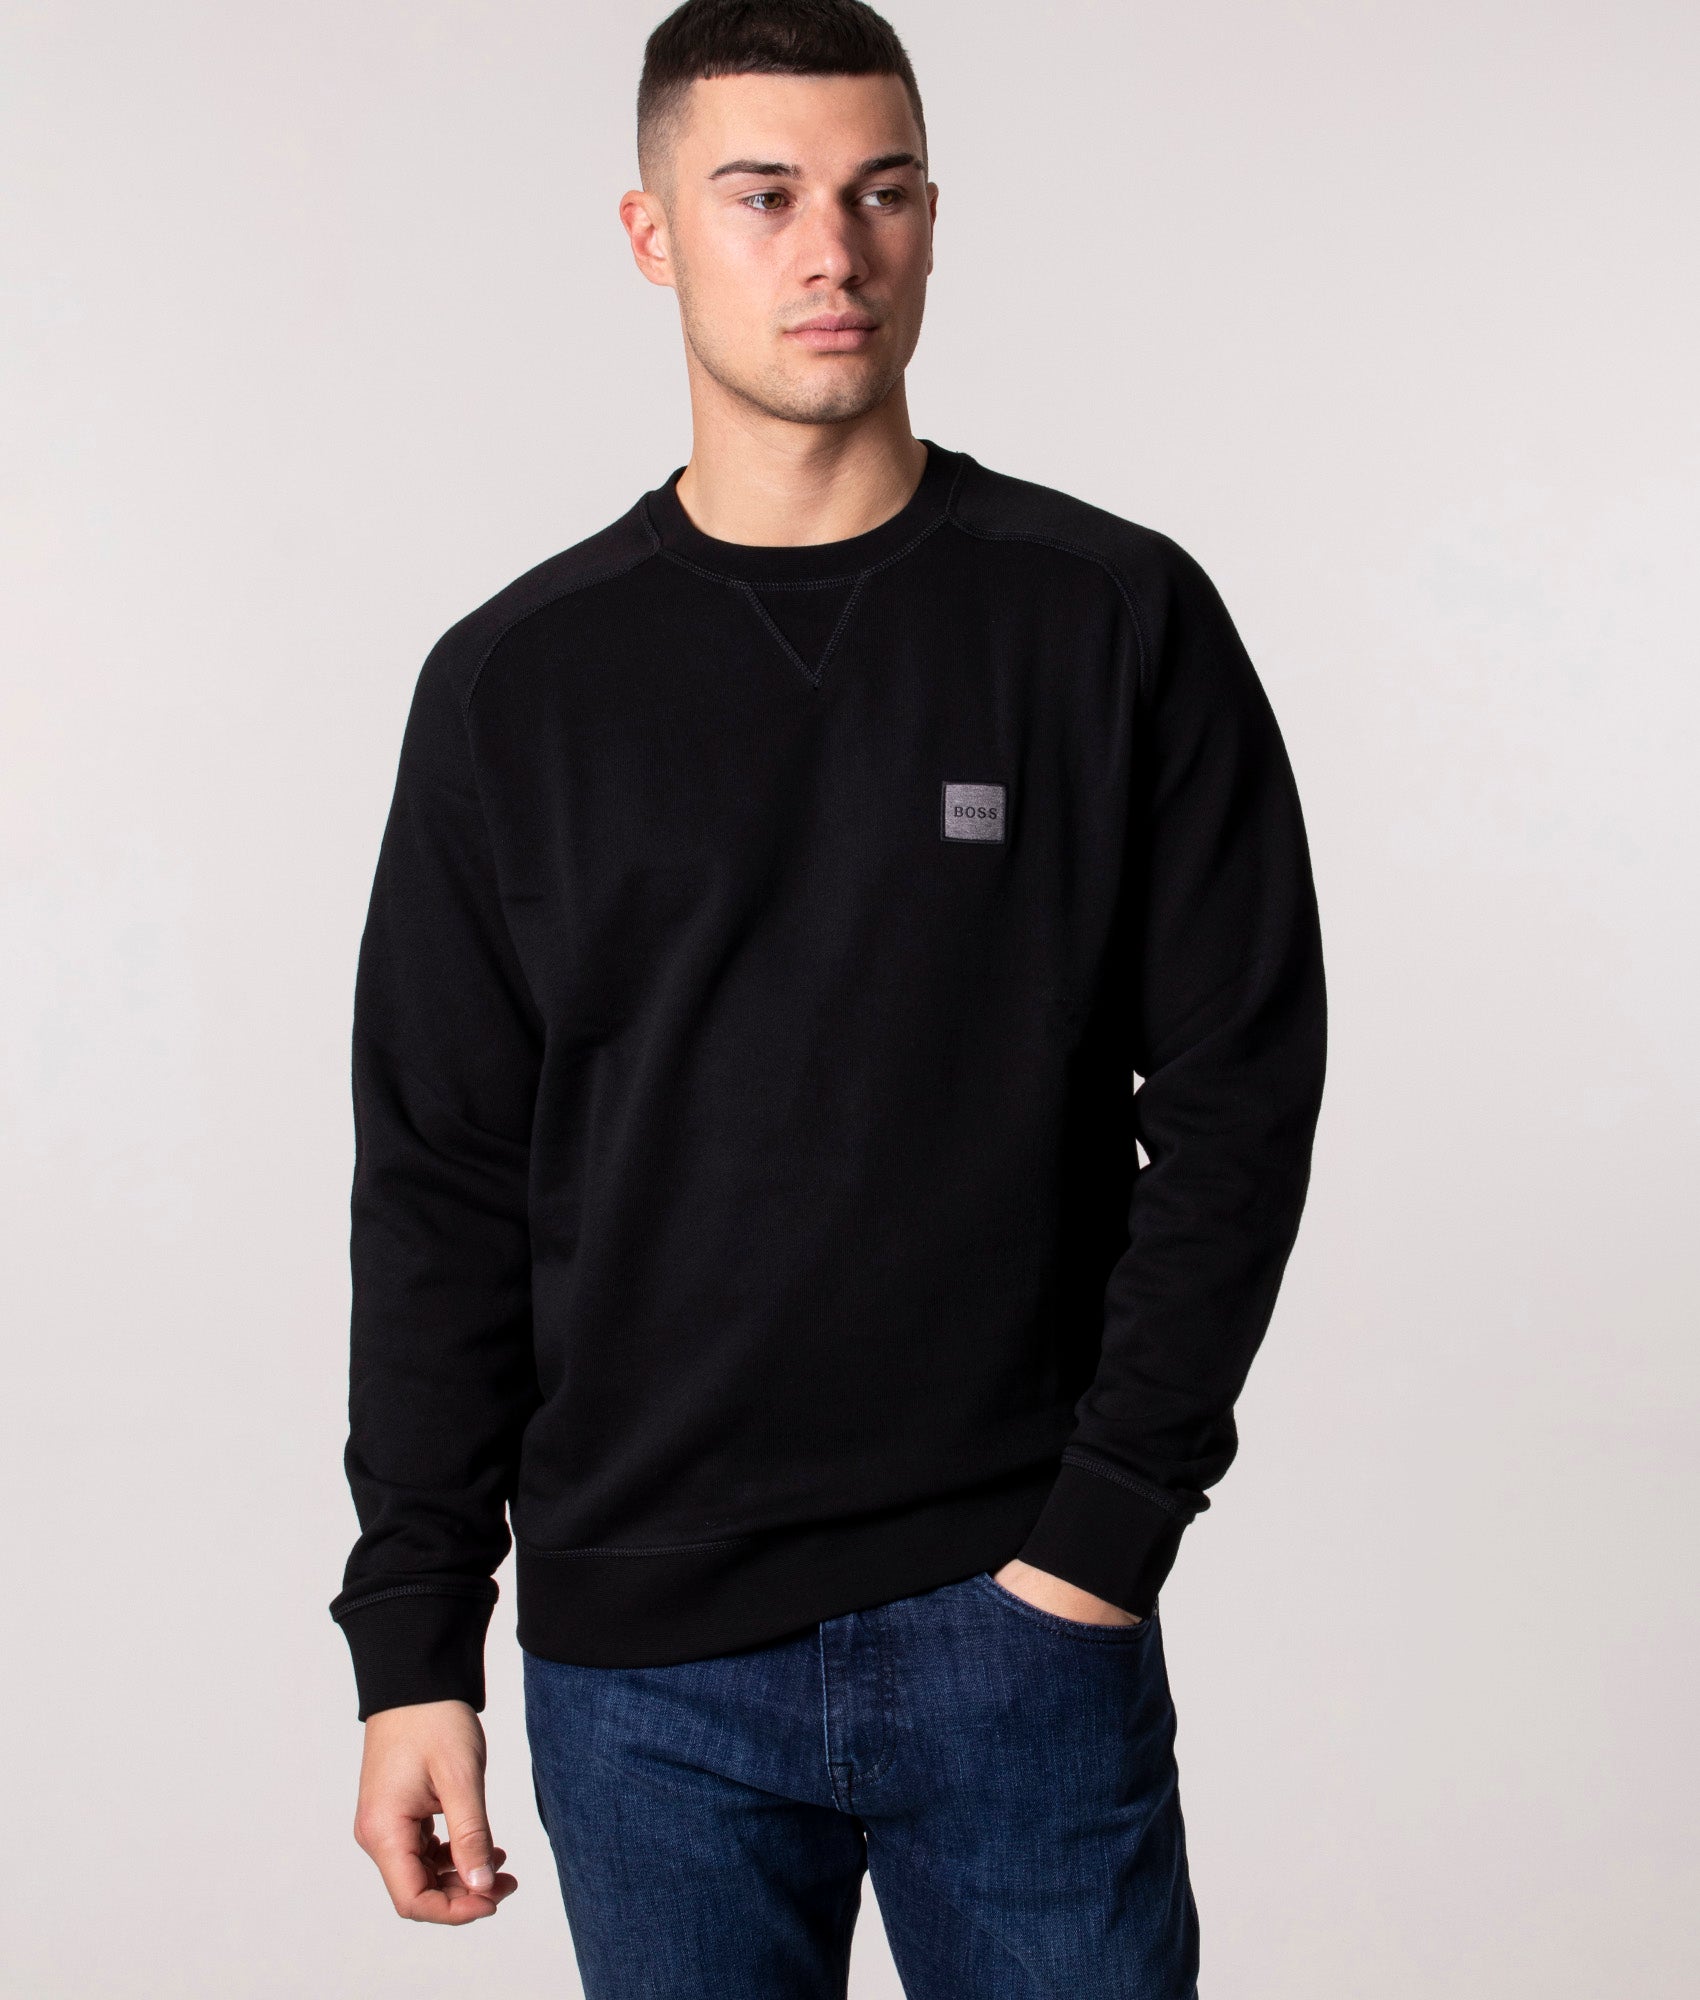 Westart Crew Neck Sweatshirt Black | BOSS | EQVVS